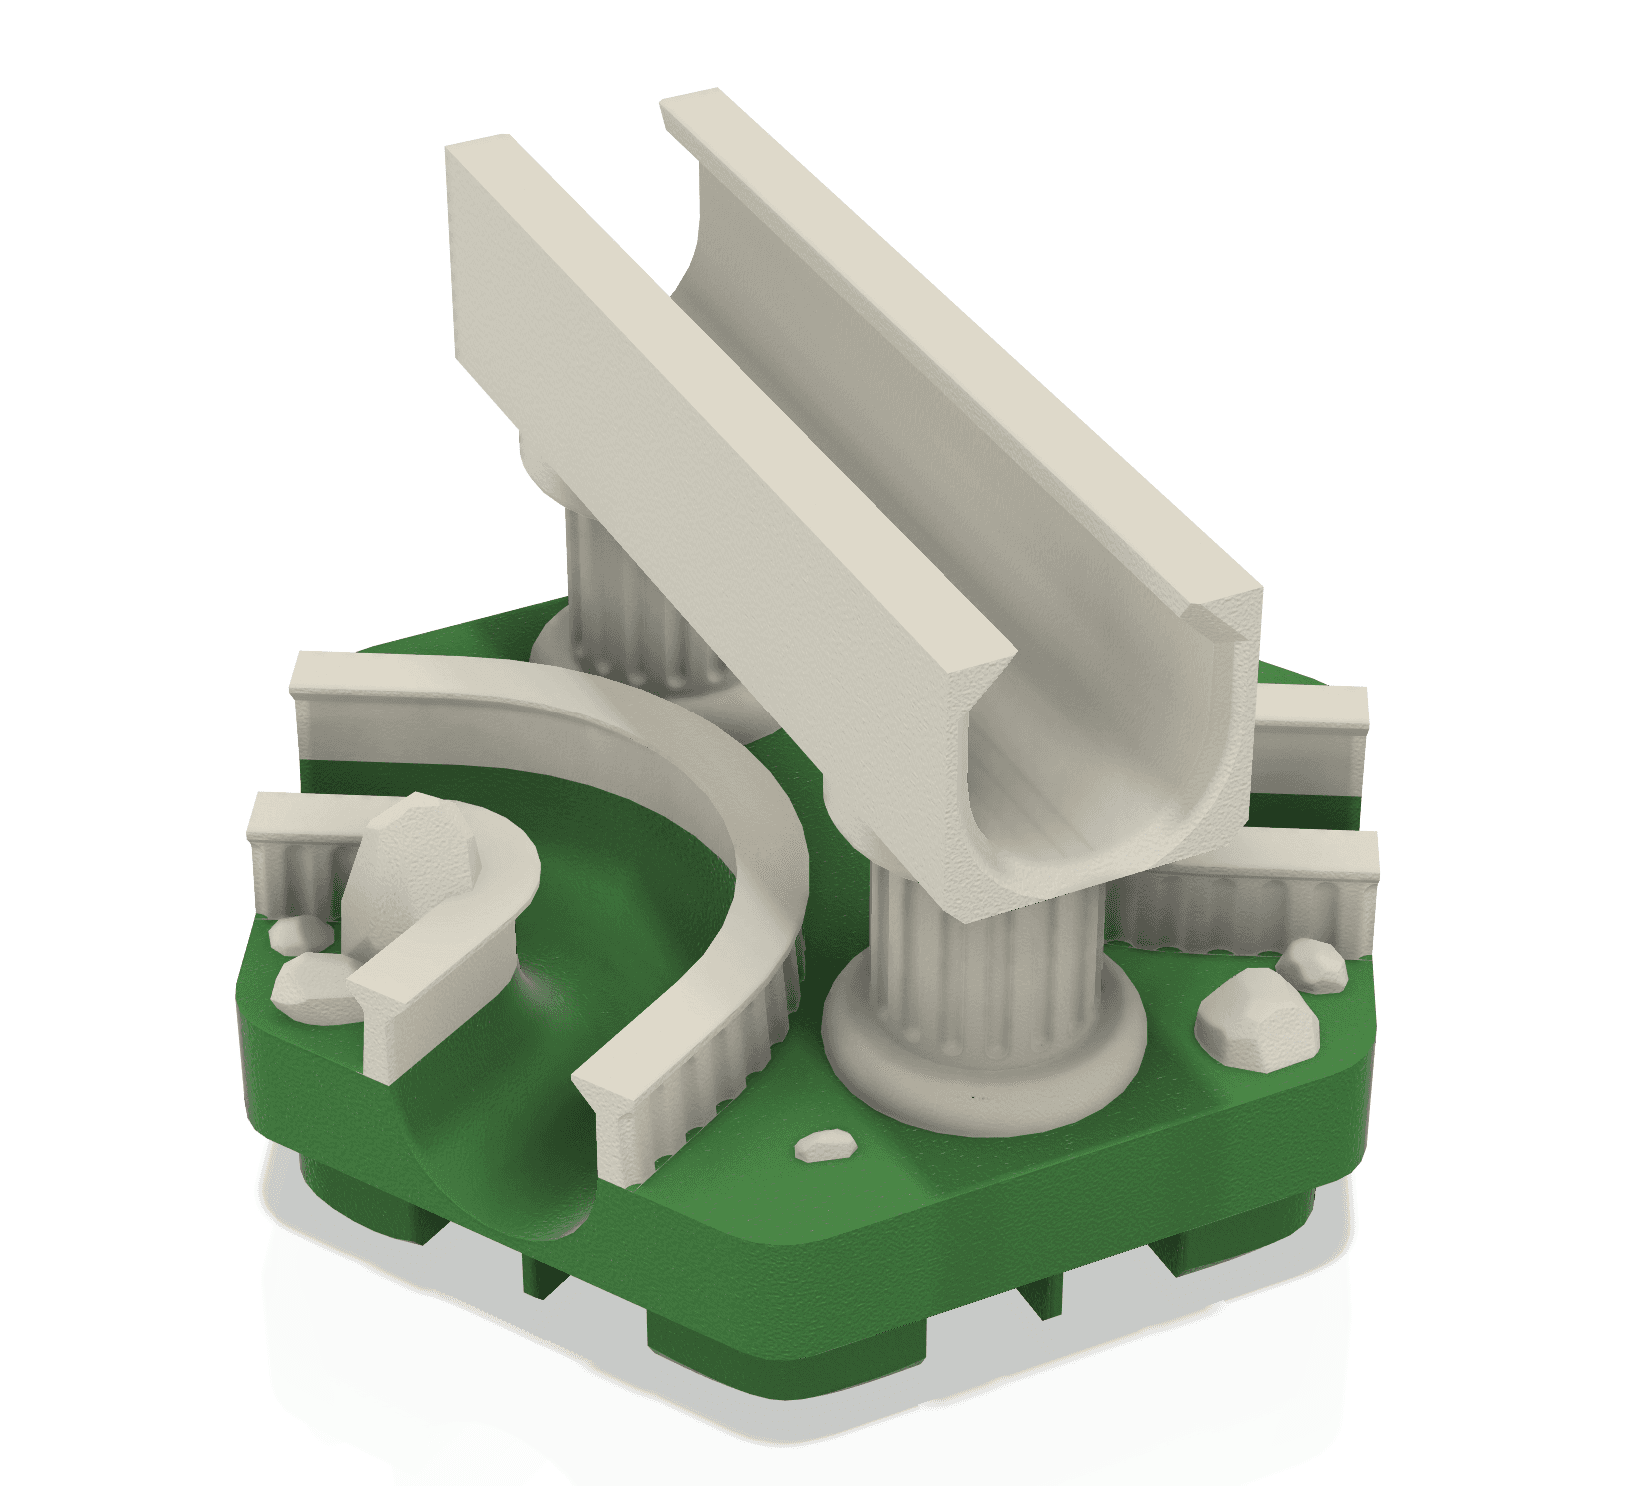 Hextraction - Aqueduct I-Tile with Roman column sideguards 3d model